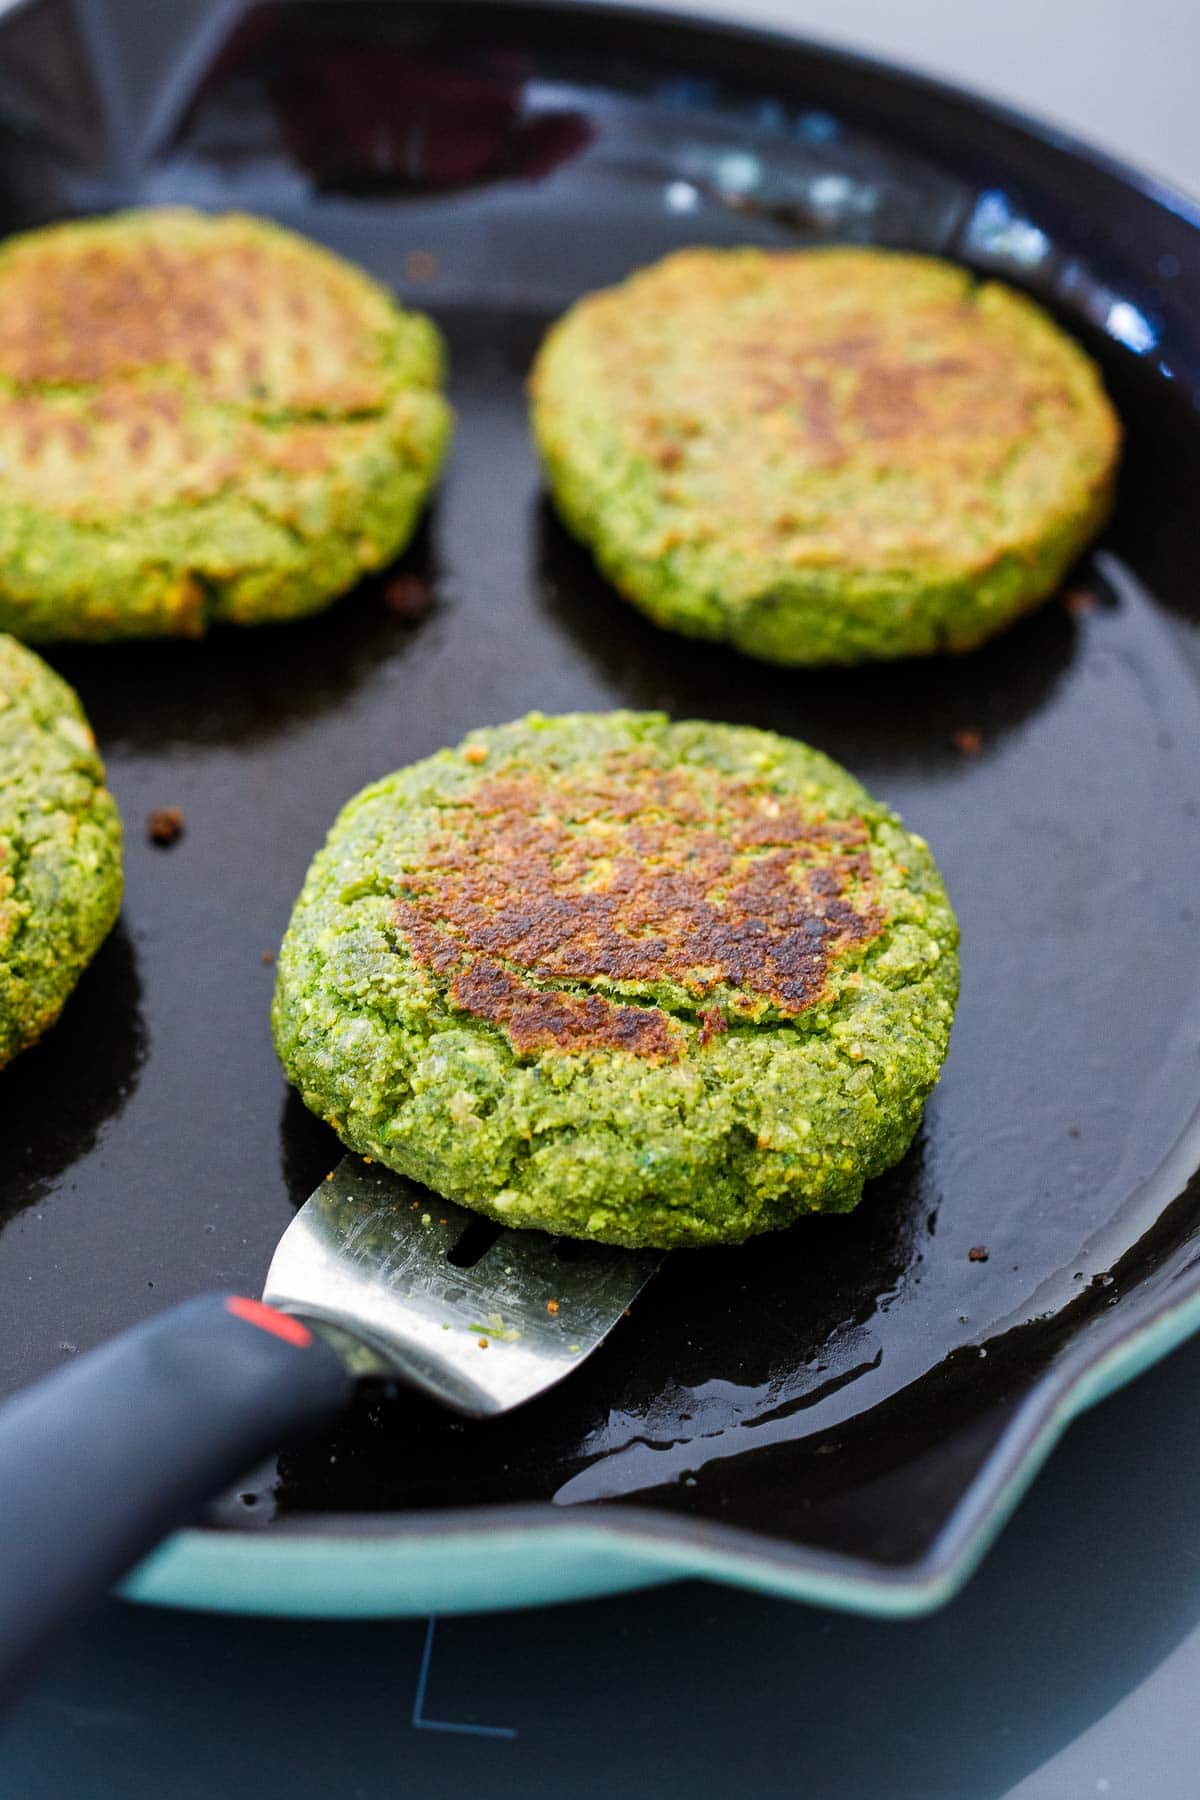 falafel burgers pan-searing in cast iron skillet.